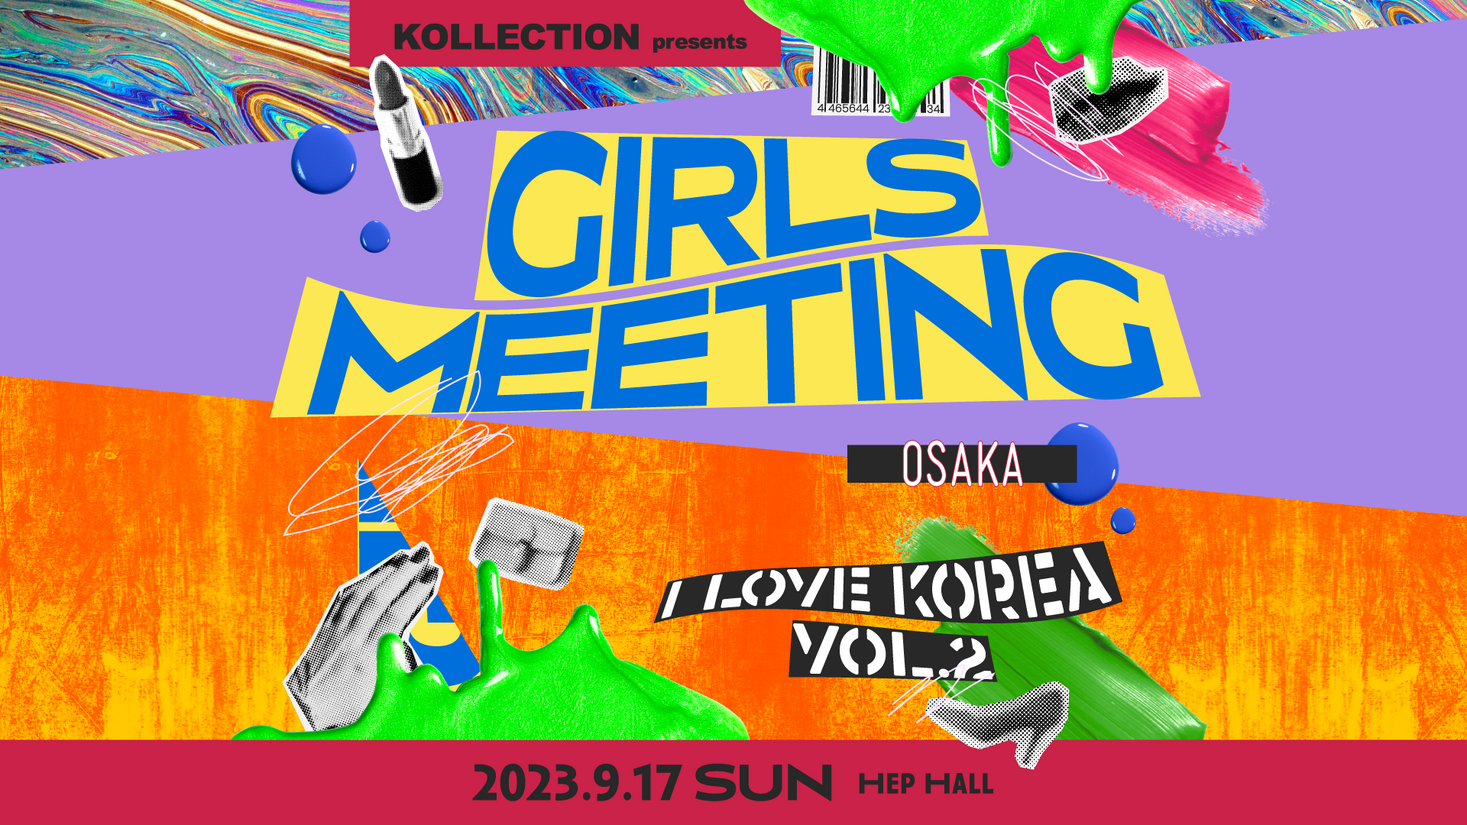 [Événement]인기 모델도 등장!  Z세대 소녀들의 콘텐츠를 한자리에 모은 이벤트 ‘GIRLS MEETING OSAKA’가 9월 17일(일) 개최됩니다.[Osaka/HEP FIVE]|  (주)콜렉션 보도자료